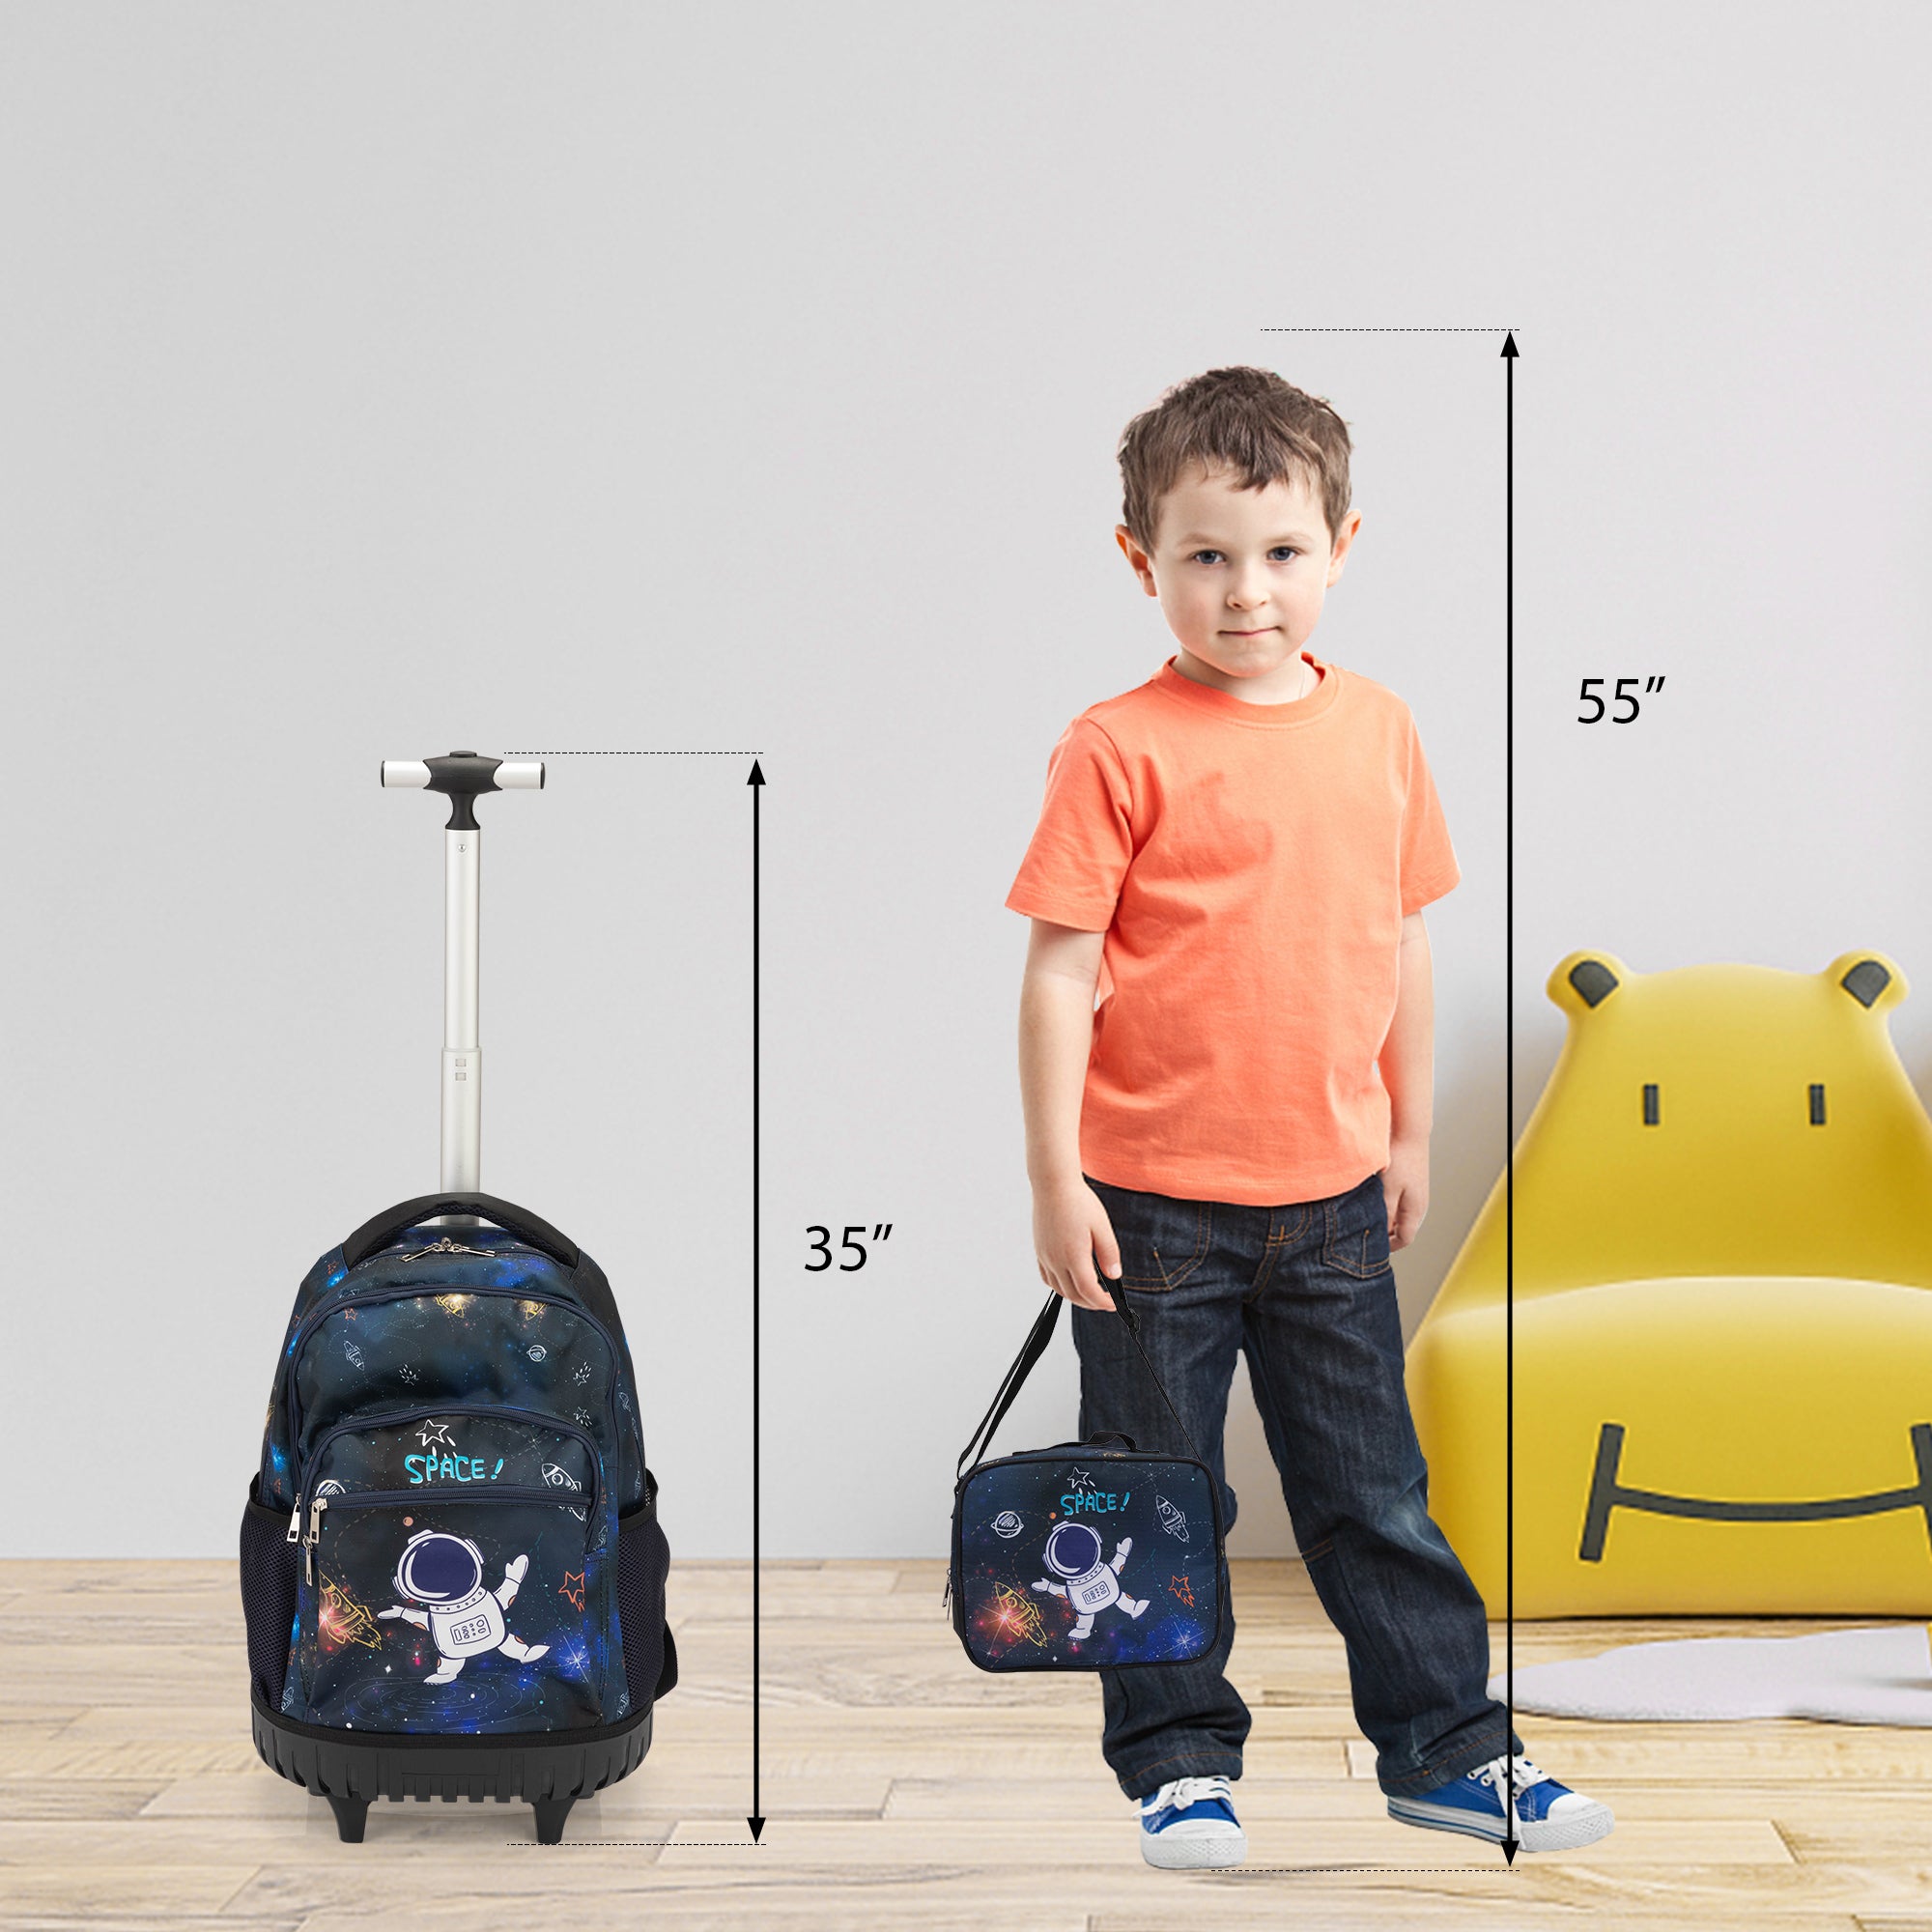 20 Inch 3pcs Kids Rolling Luggage Set, Trolley